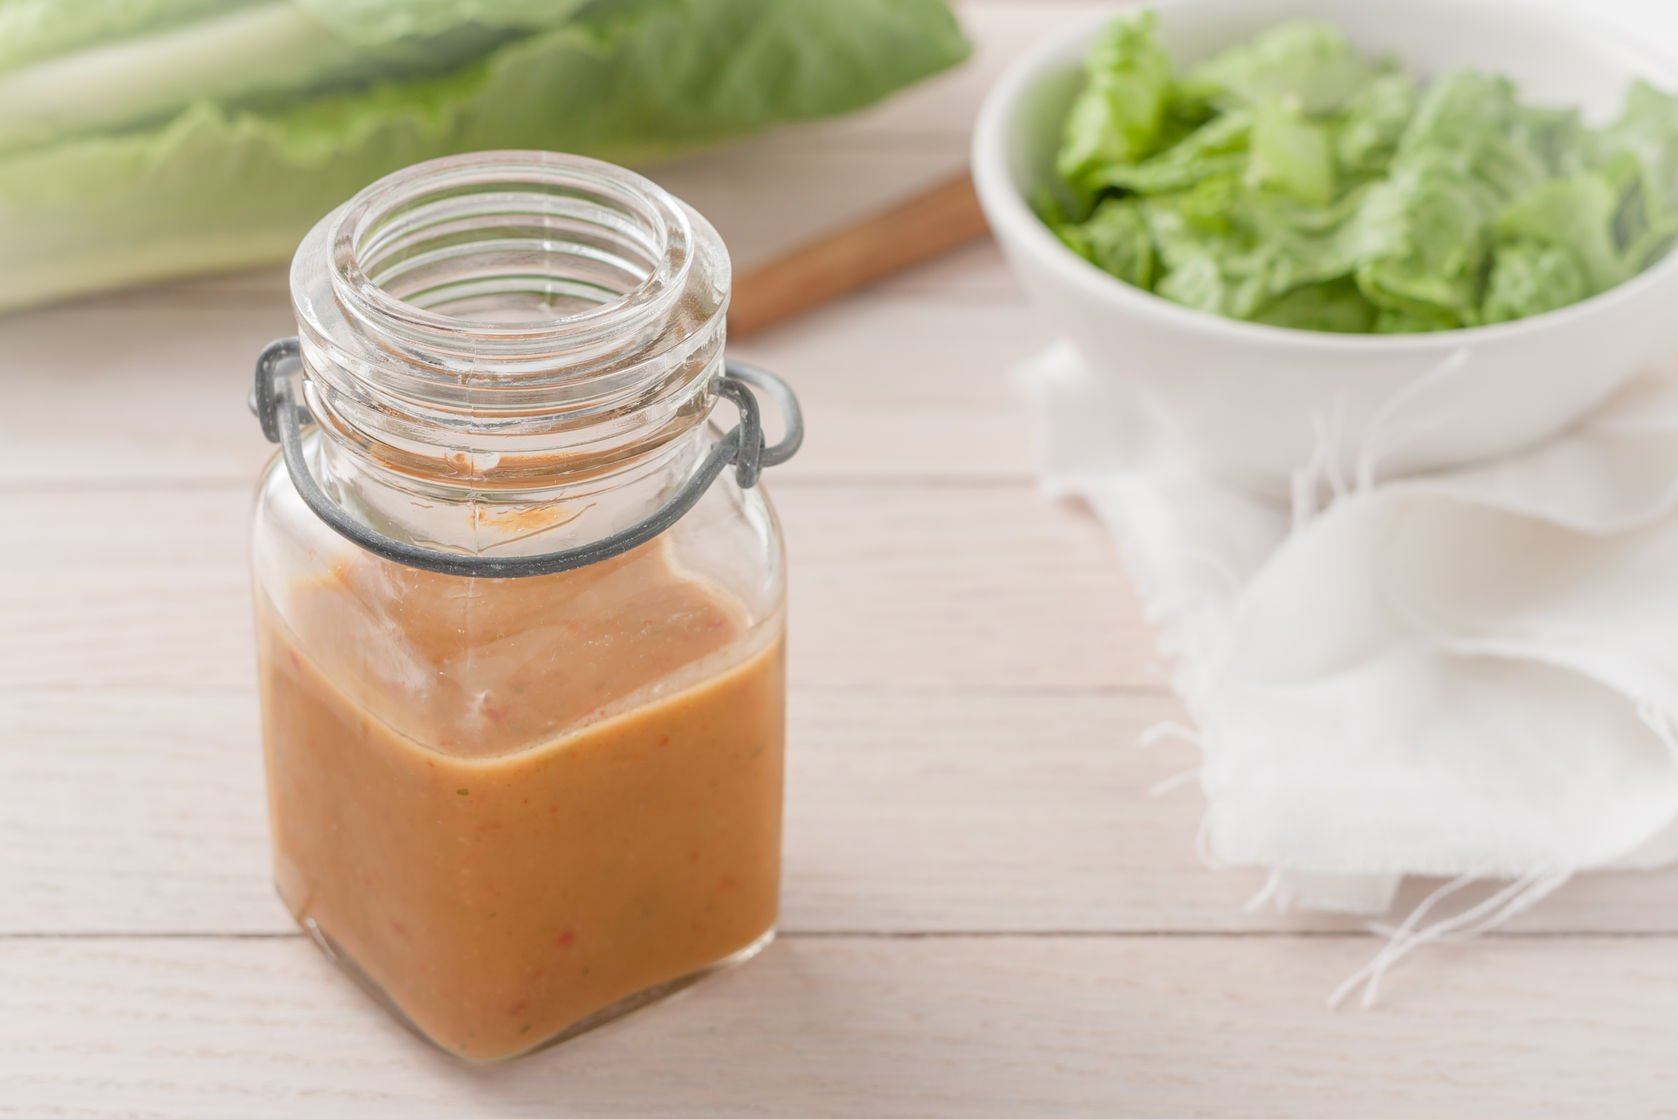 mason jar salad | Princeton Nutrients 